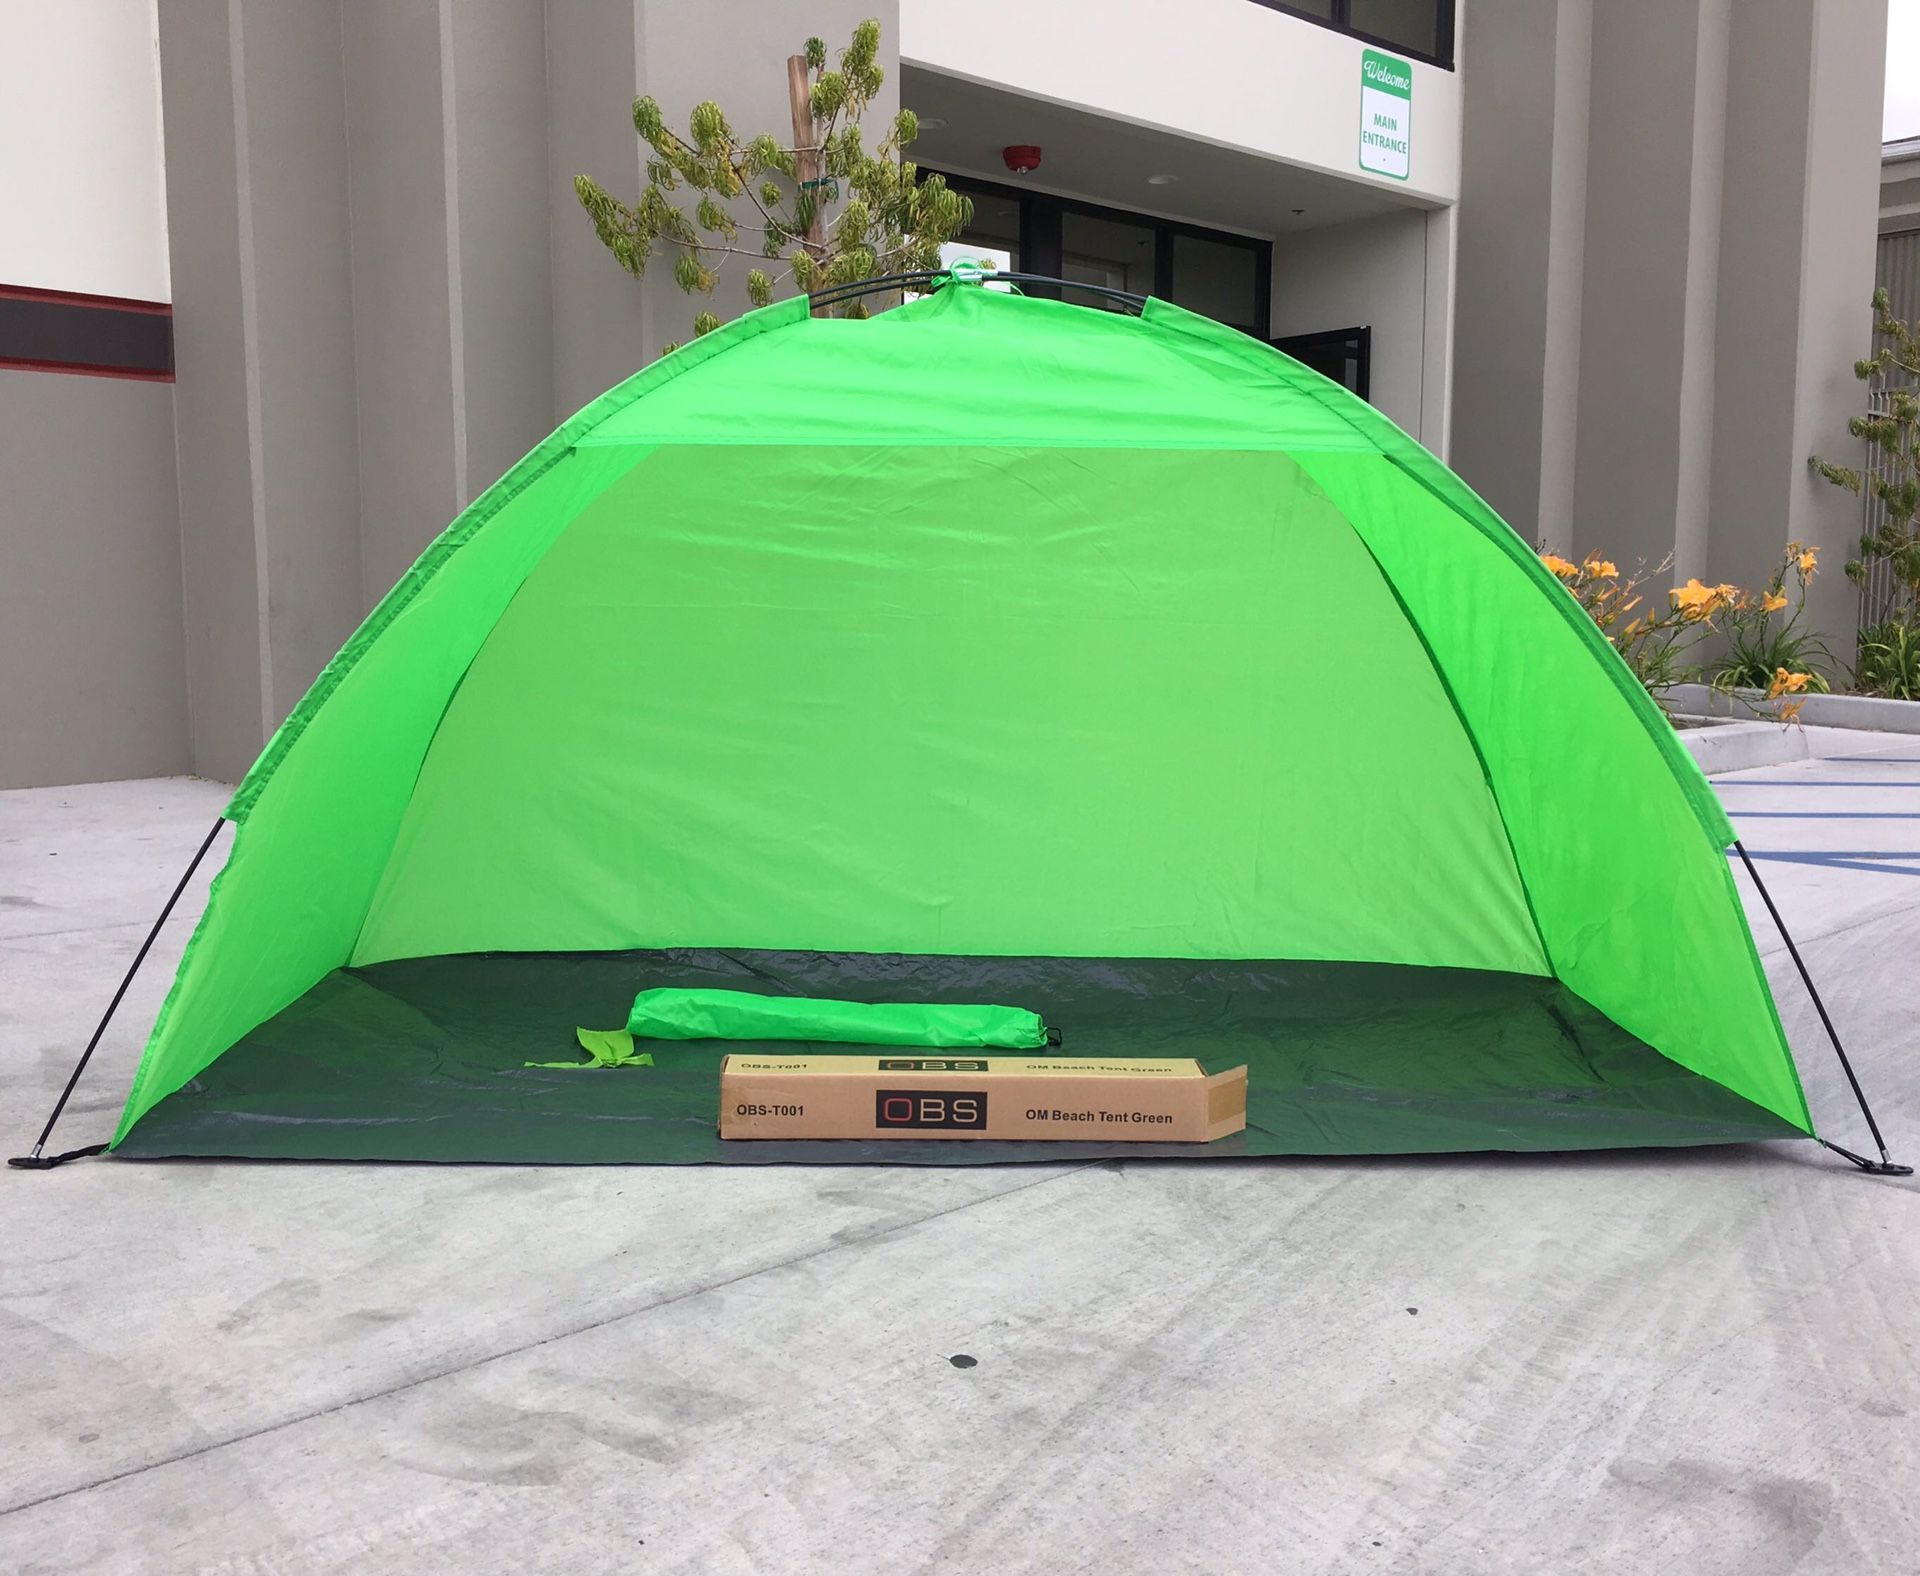 New in box $15 each 7x3 feet beach tent sun shade 3 person use blue color